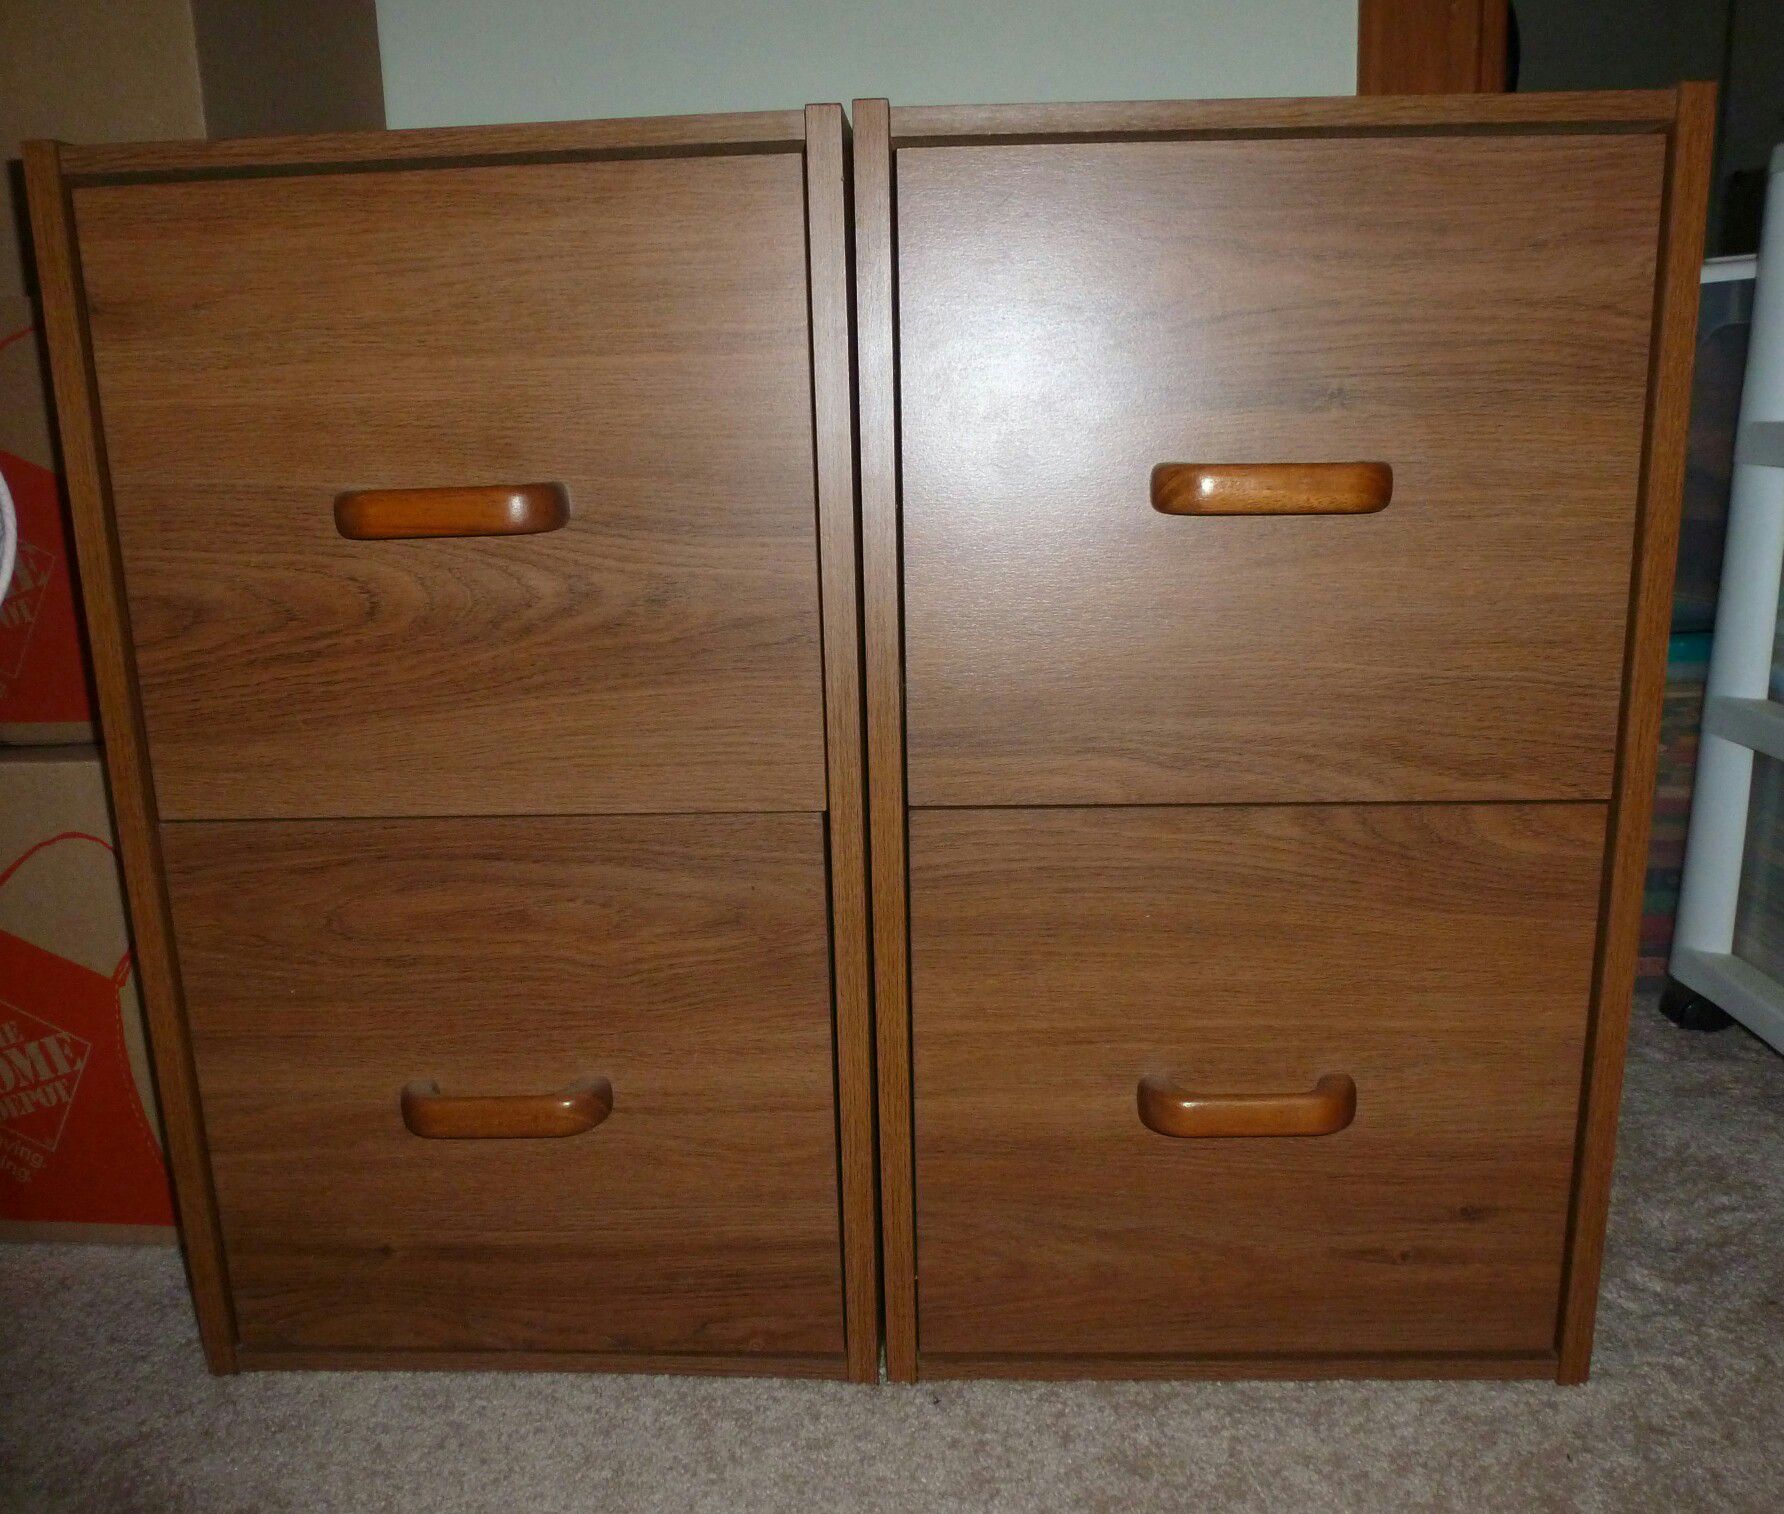 Wood file cabinets